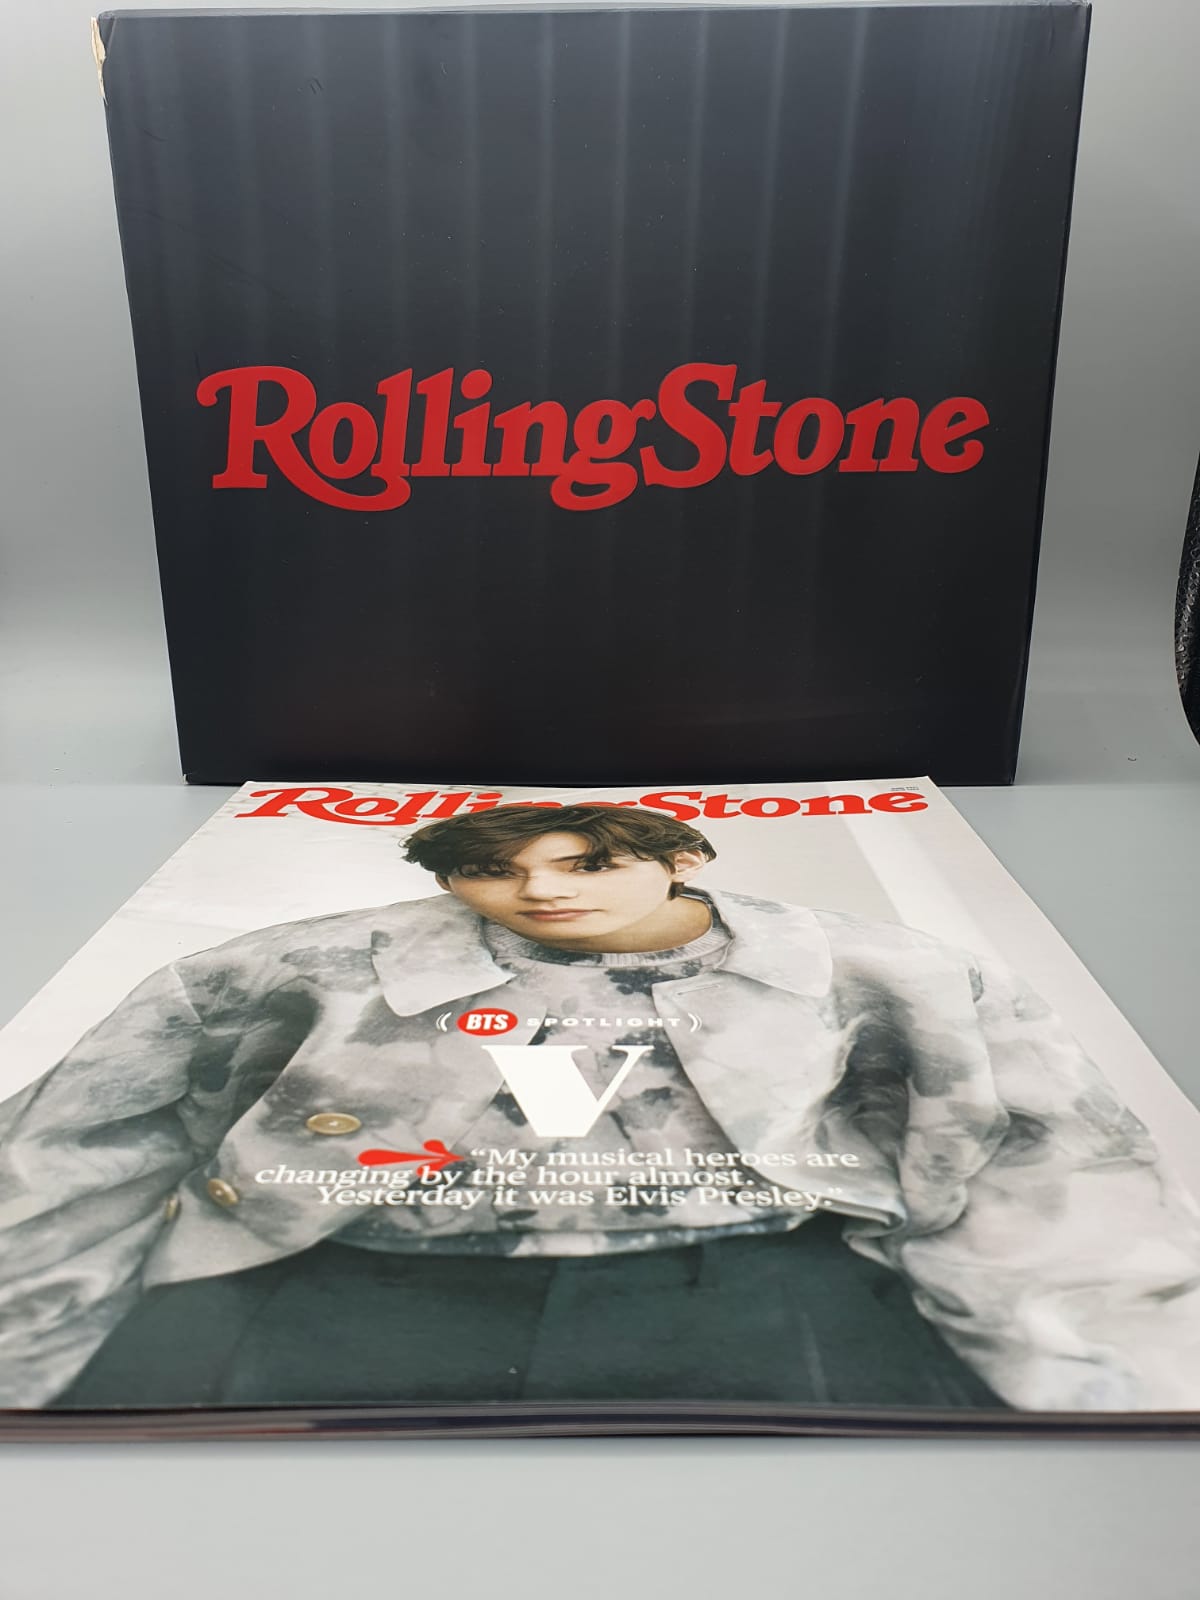 BTS Rolling Agency Stone 8pcs BTS Box Magazines Collectors – Korean Art Set Edition Ltd Cover